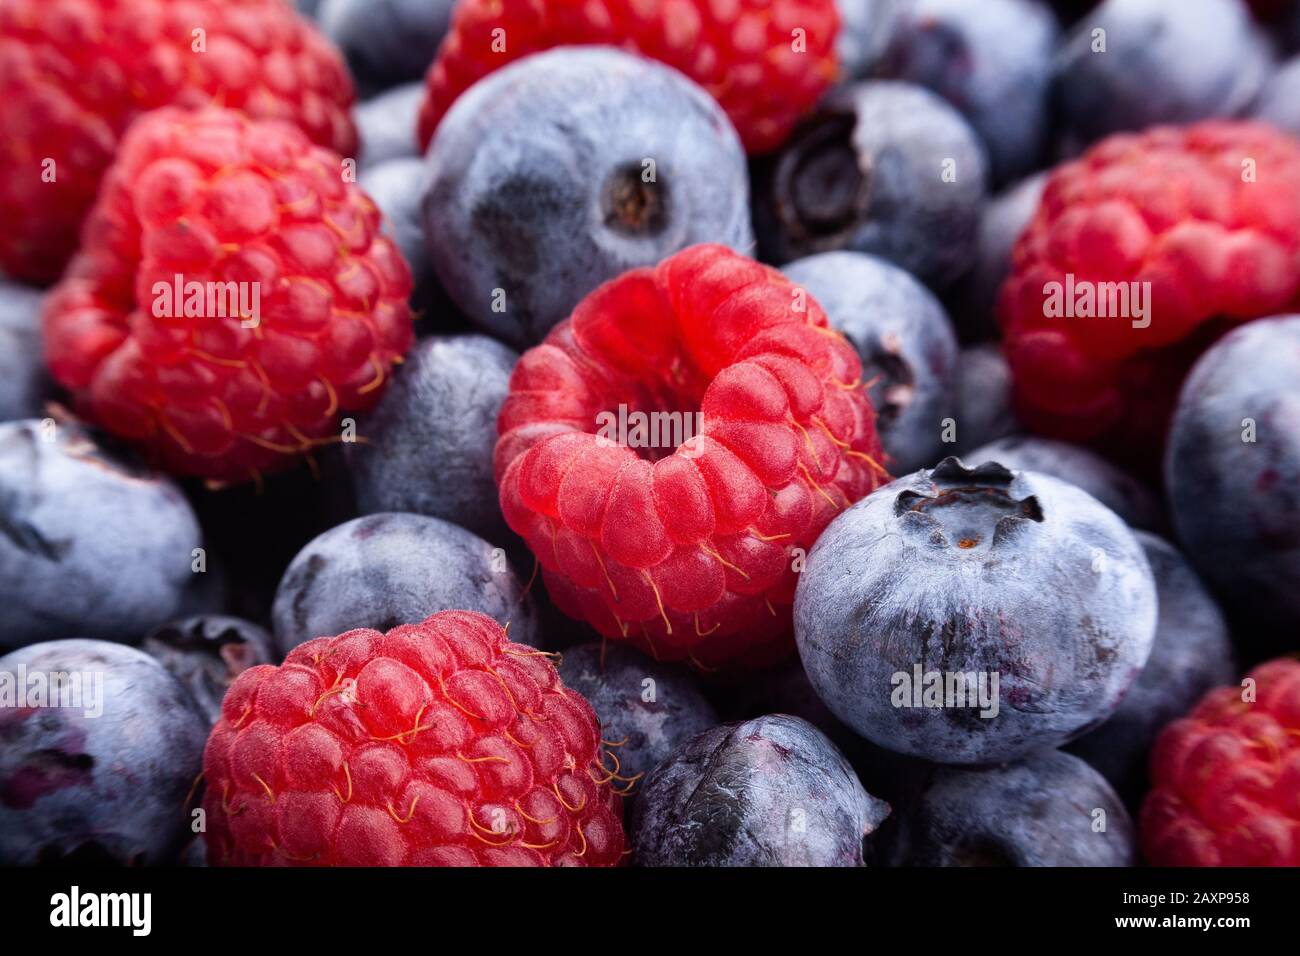 raspberry blueberry mix macro closeup creative focus Stock Photo